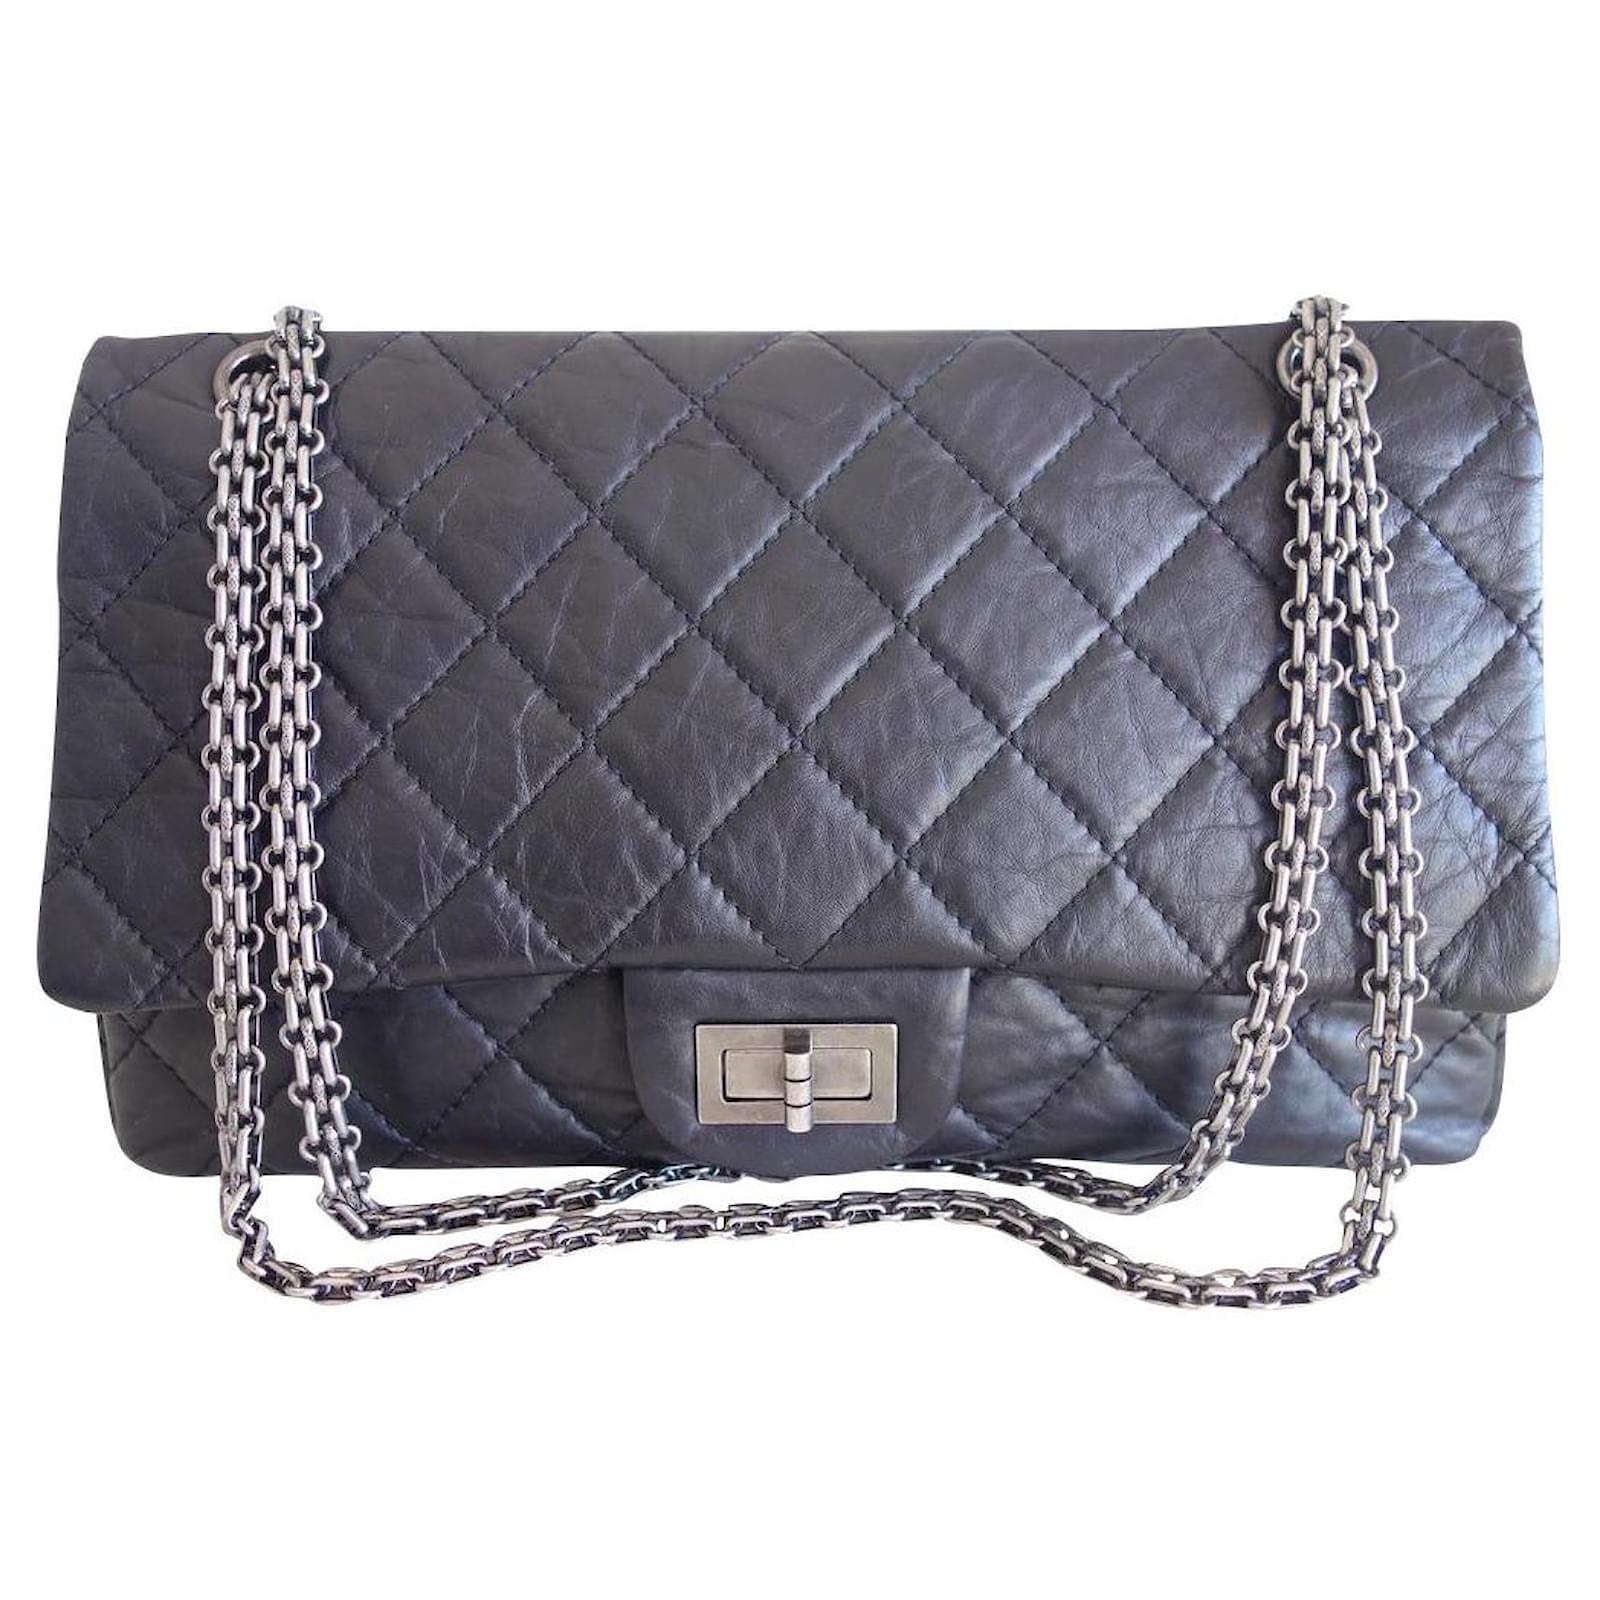 Chanel Metallic Silver Maxi 2.55 Reissue Flap Bag 228 size